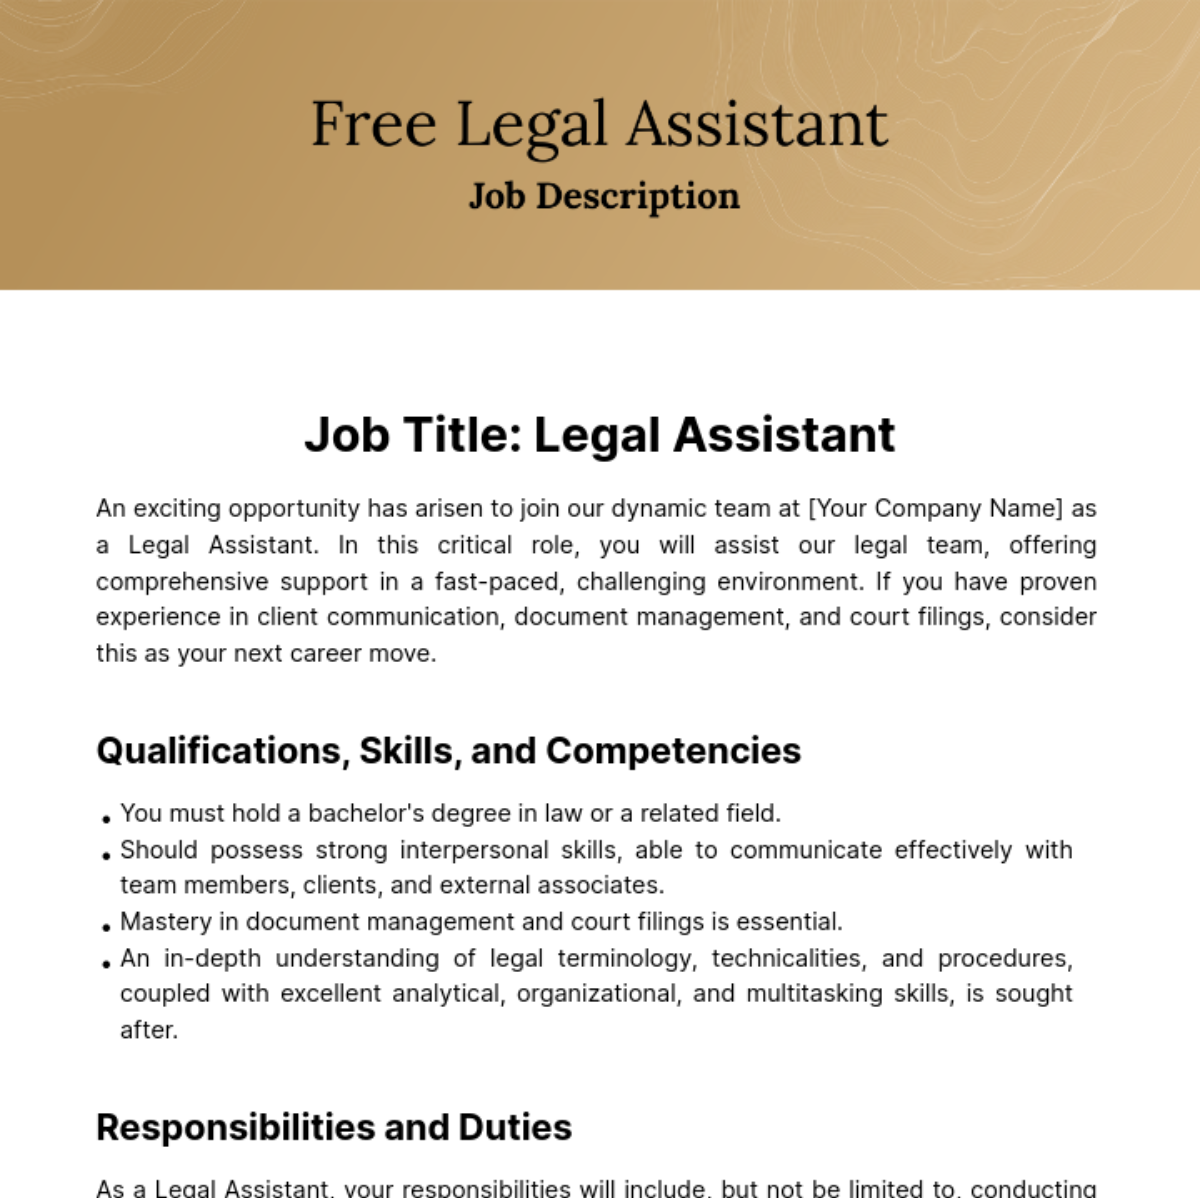 Free Legal Assistant Job Description Template